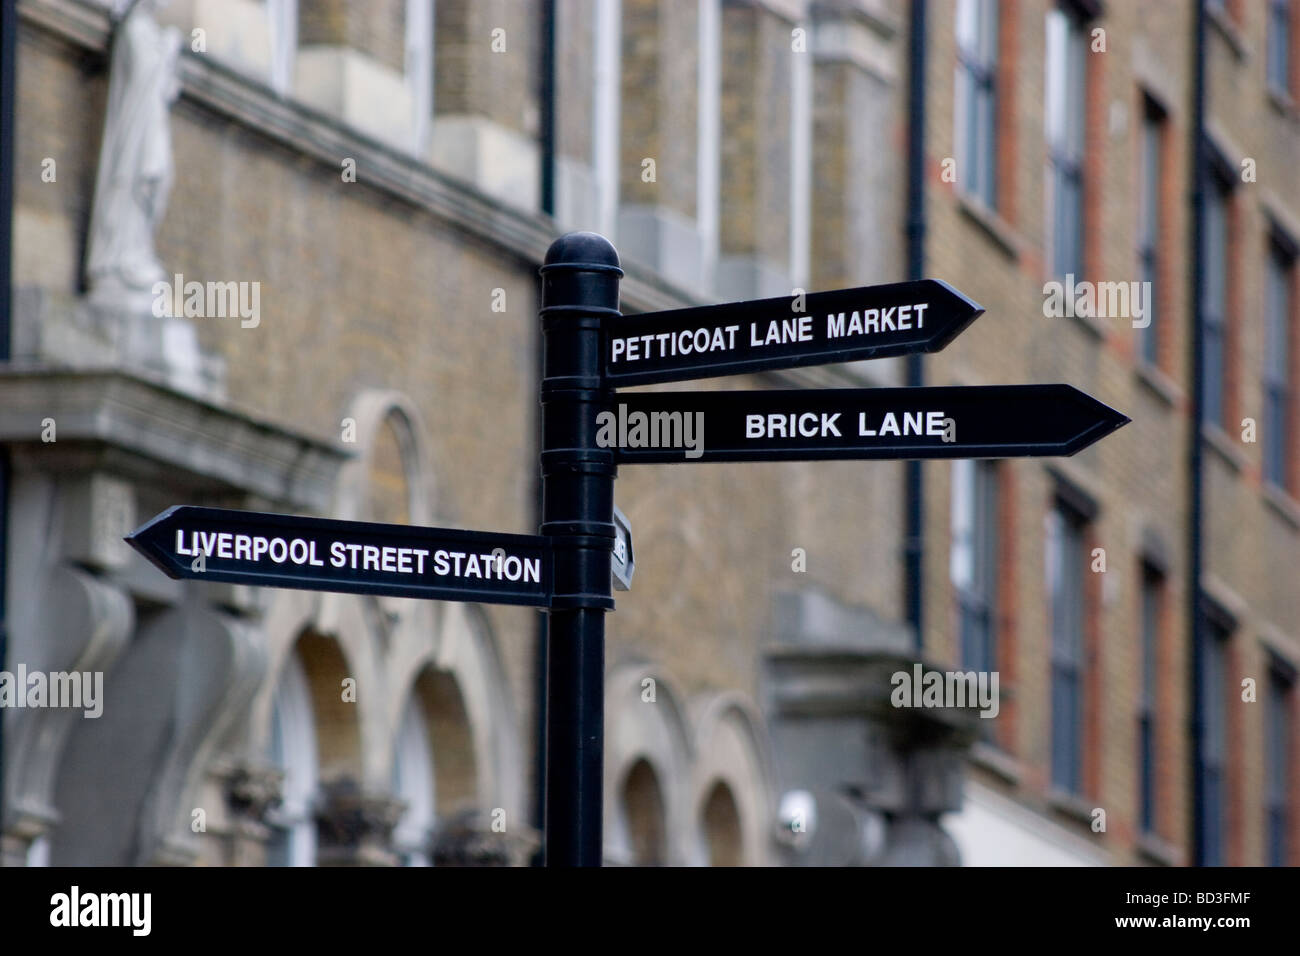 street sign brick lane with petticoat lane brick lane and liverpool street station indicated Stock Photo